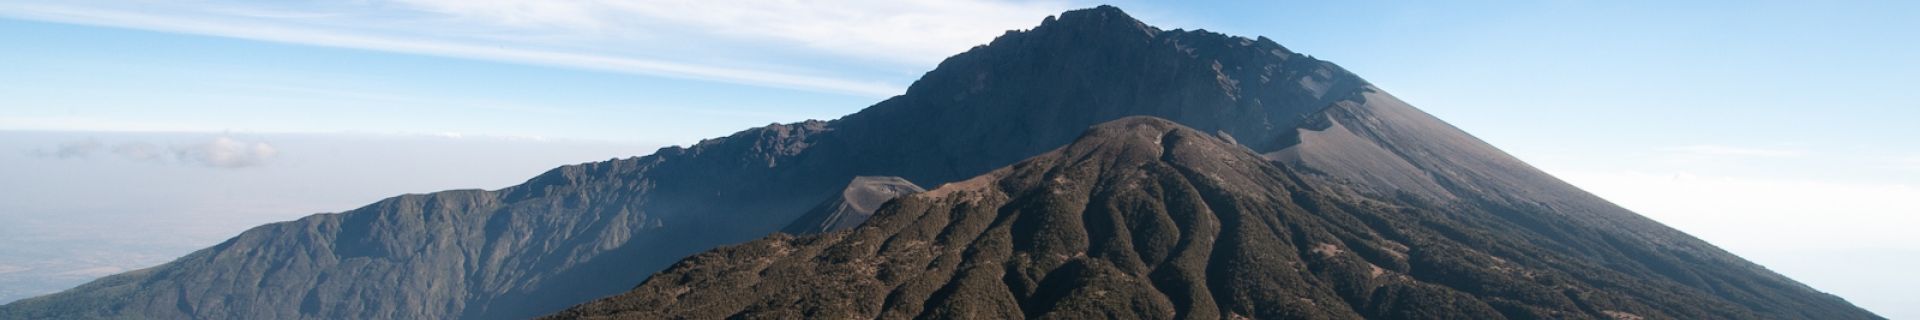 Mount Meru Caldera